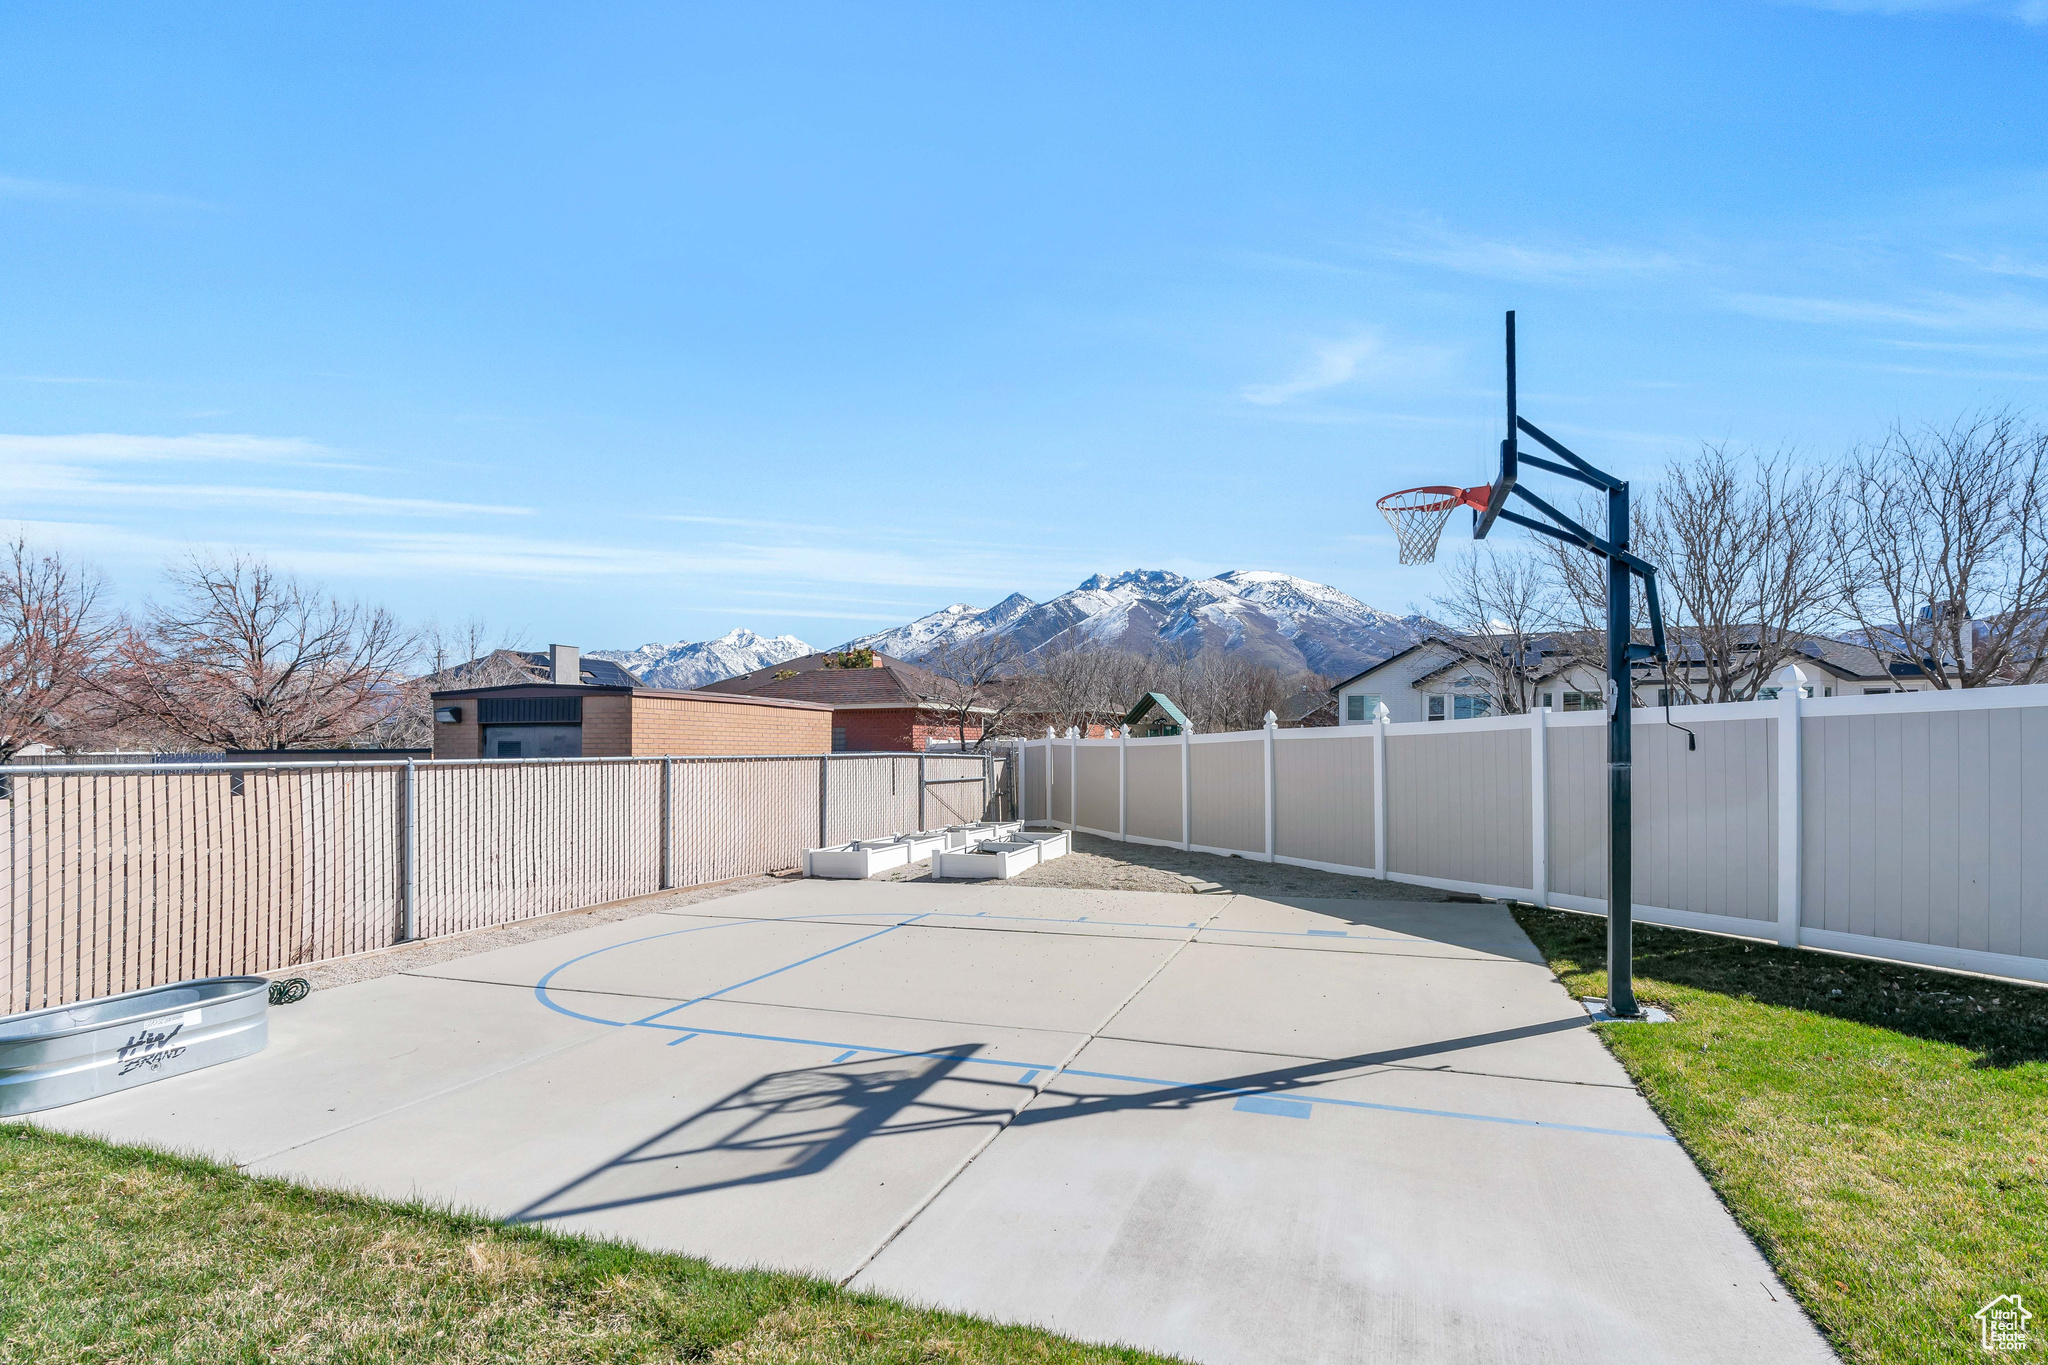 Basketball court/RV parking (gates open to allow parking)